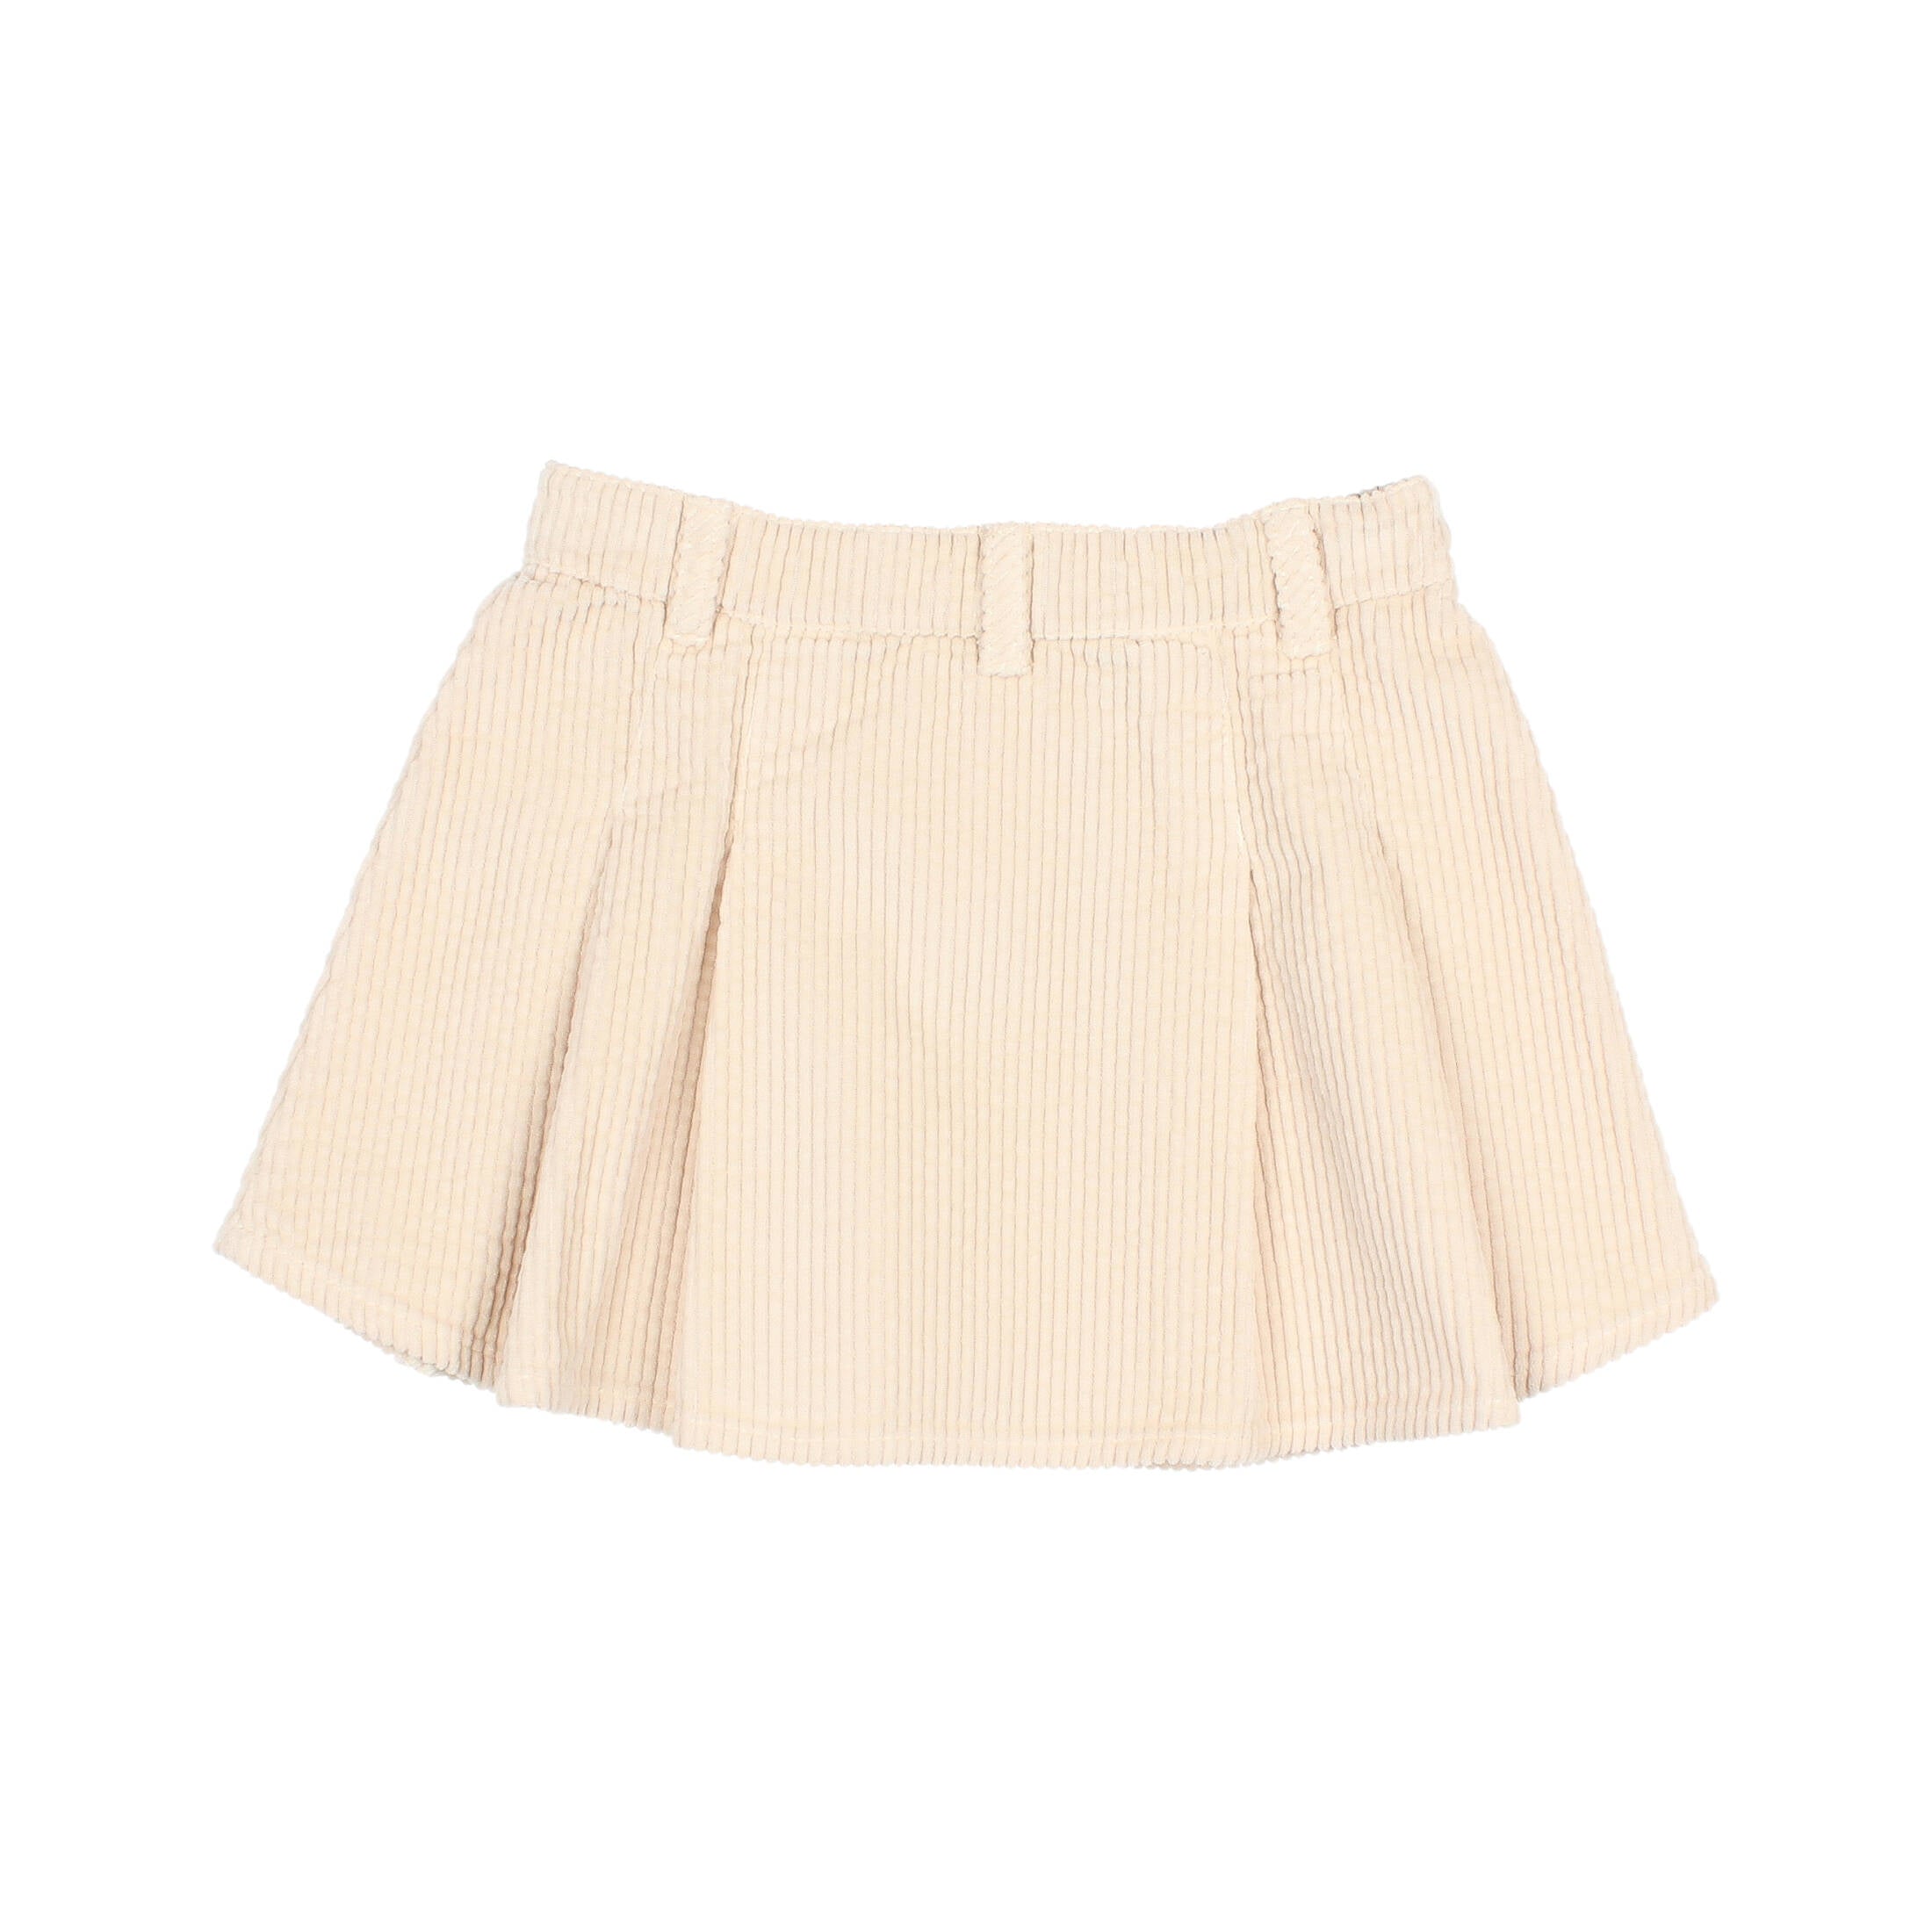 Buho Pale Pink Box Pleat Corduroy Skirt